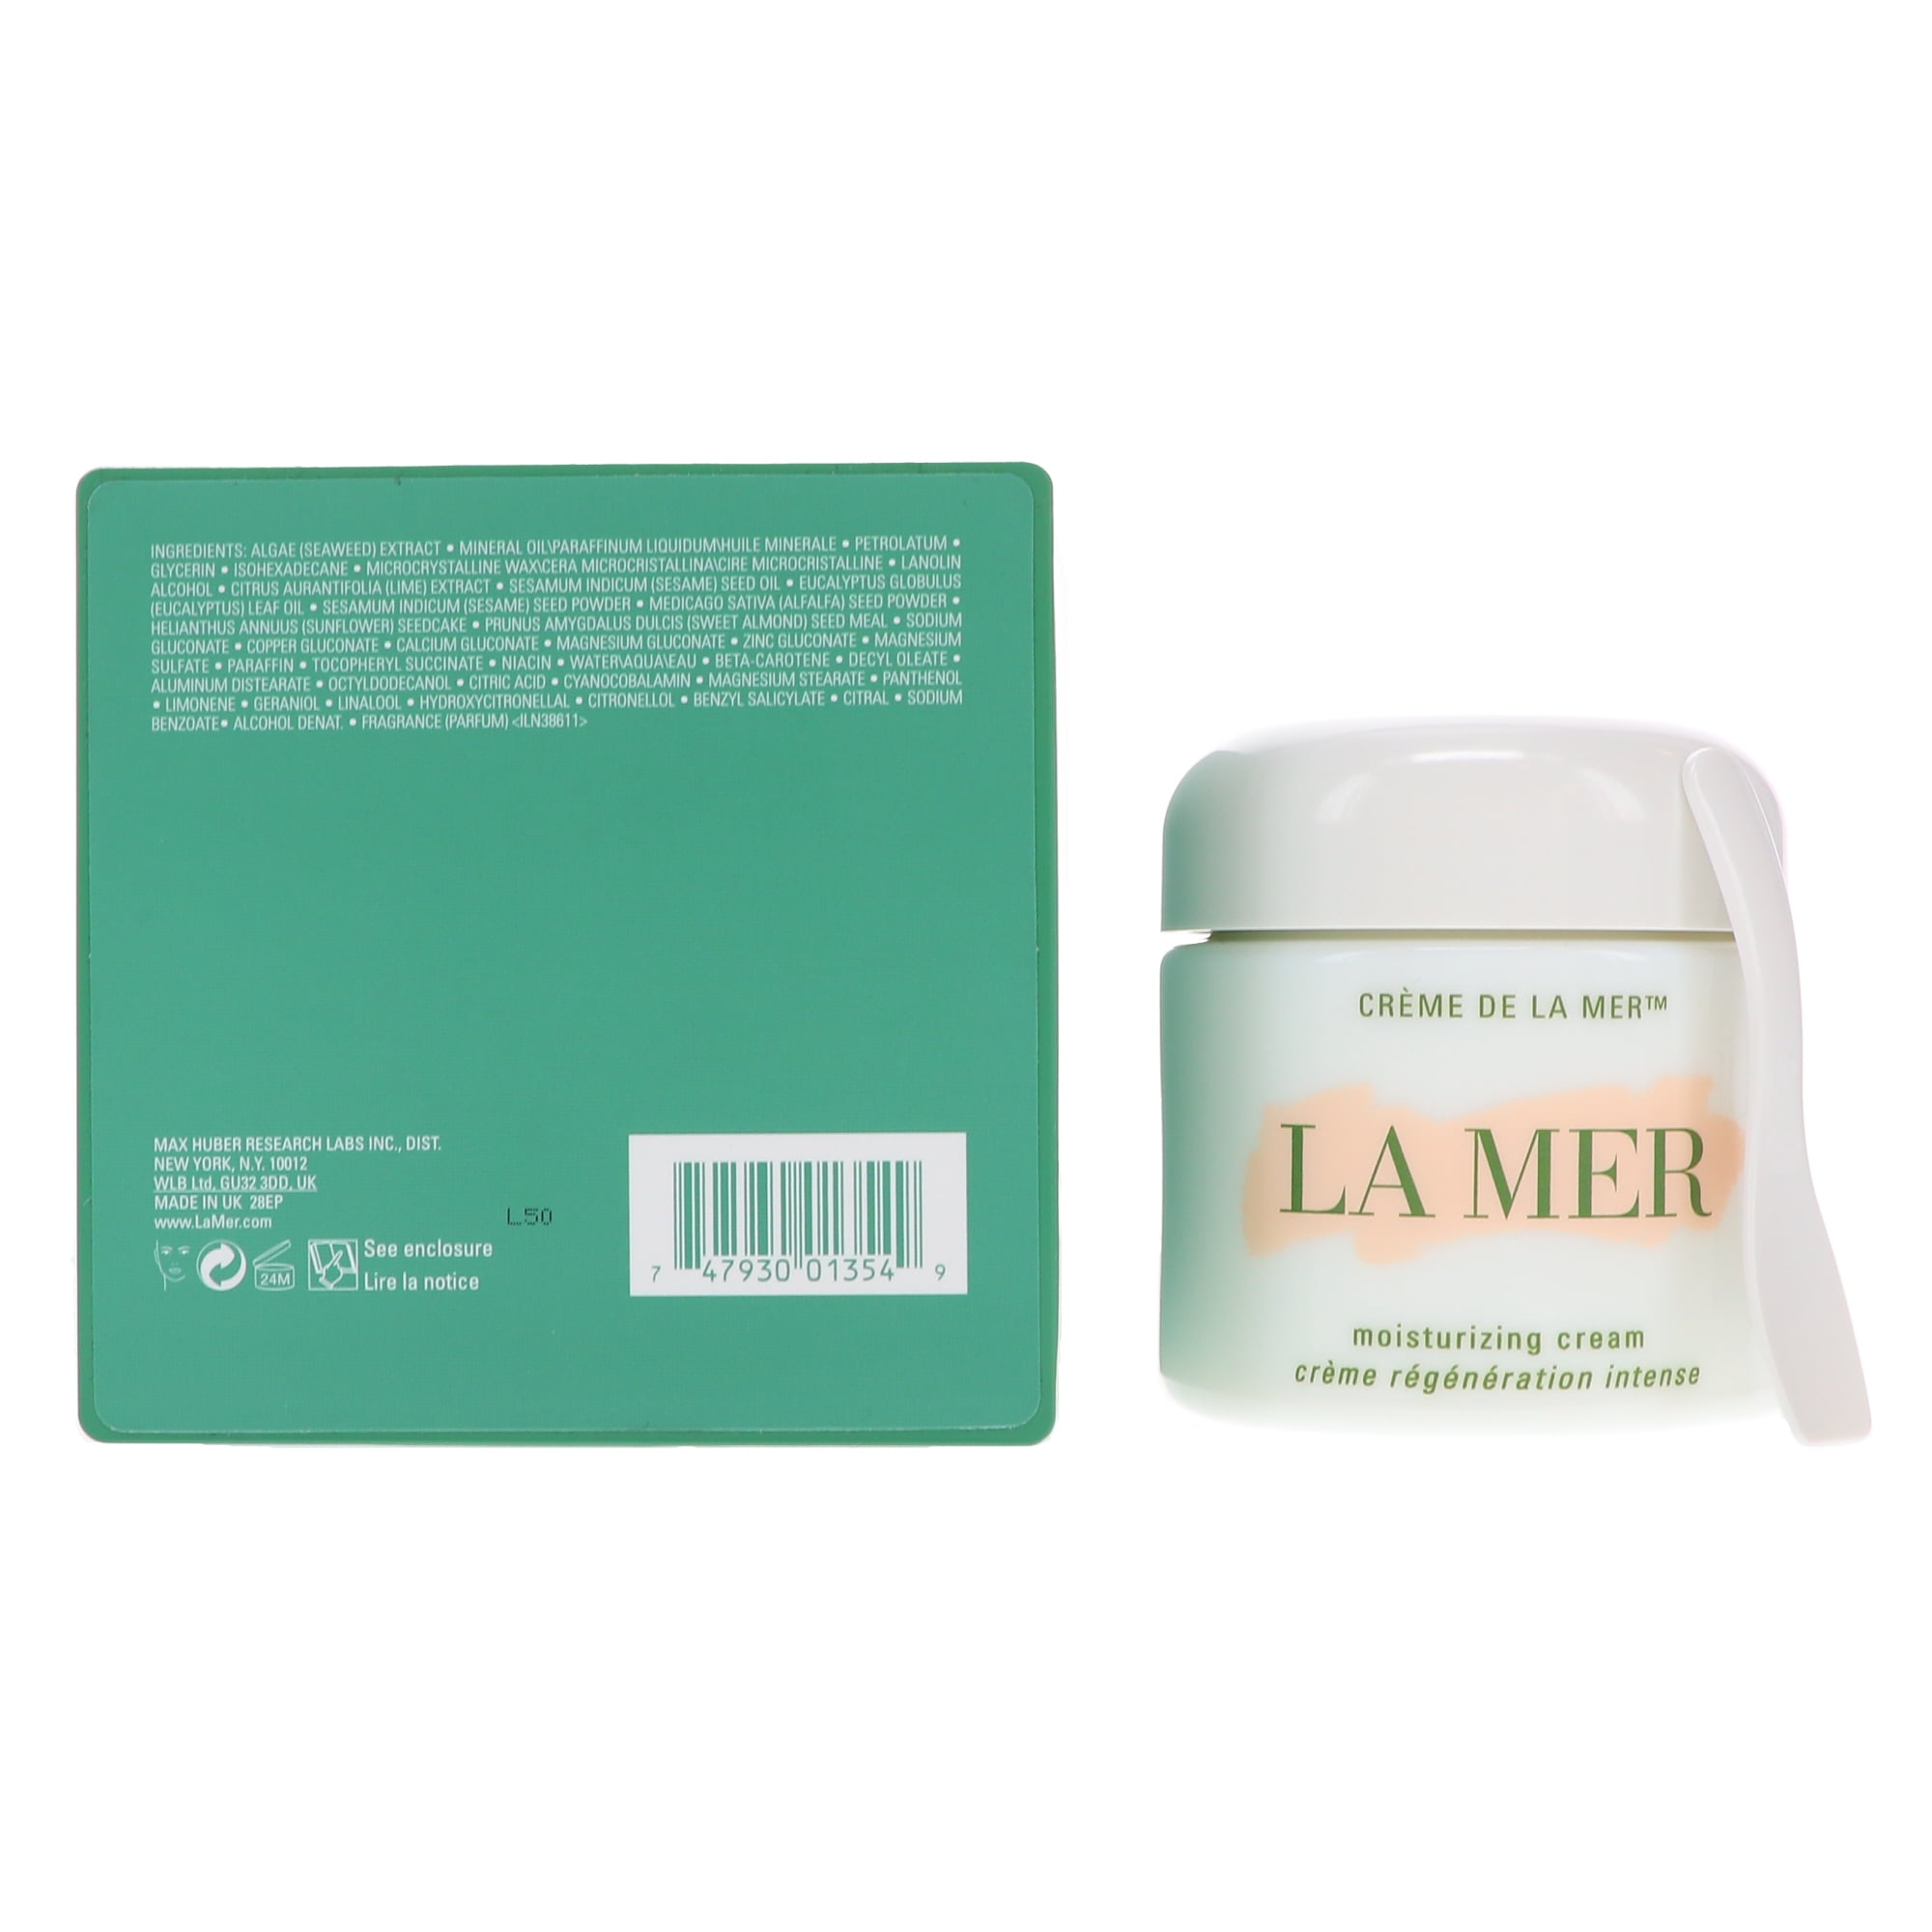 The Mer La Moisturizing Cream 3.4 oz